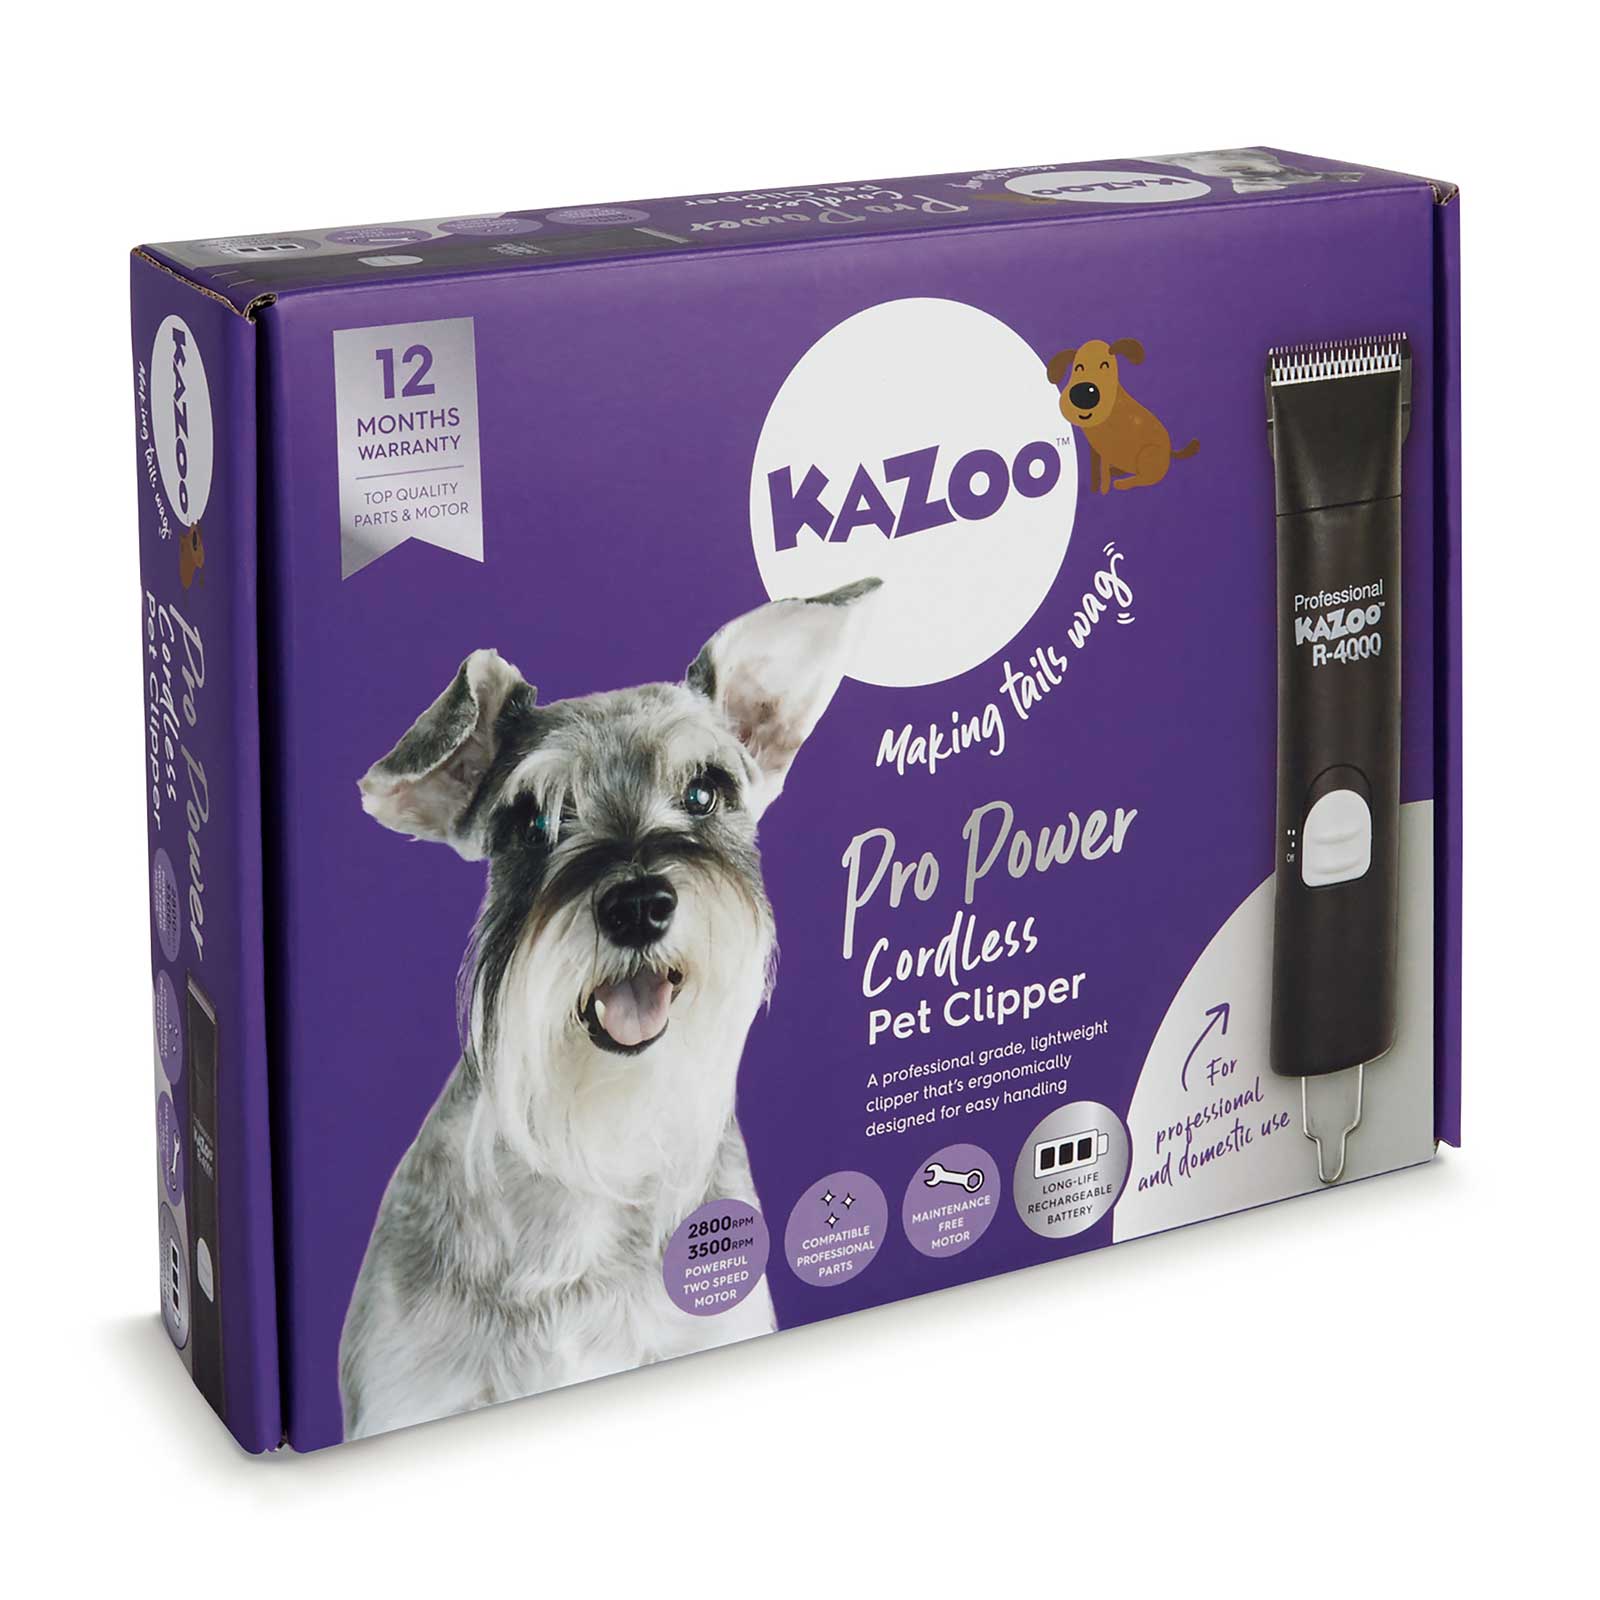 Kazoo Dog Clipper Pro Power Cordless